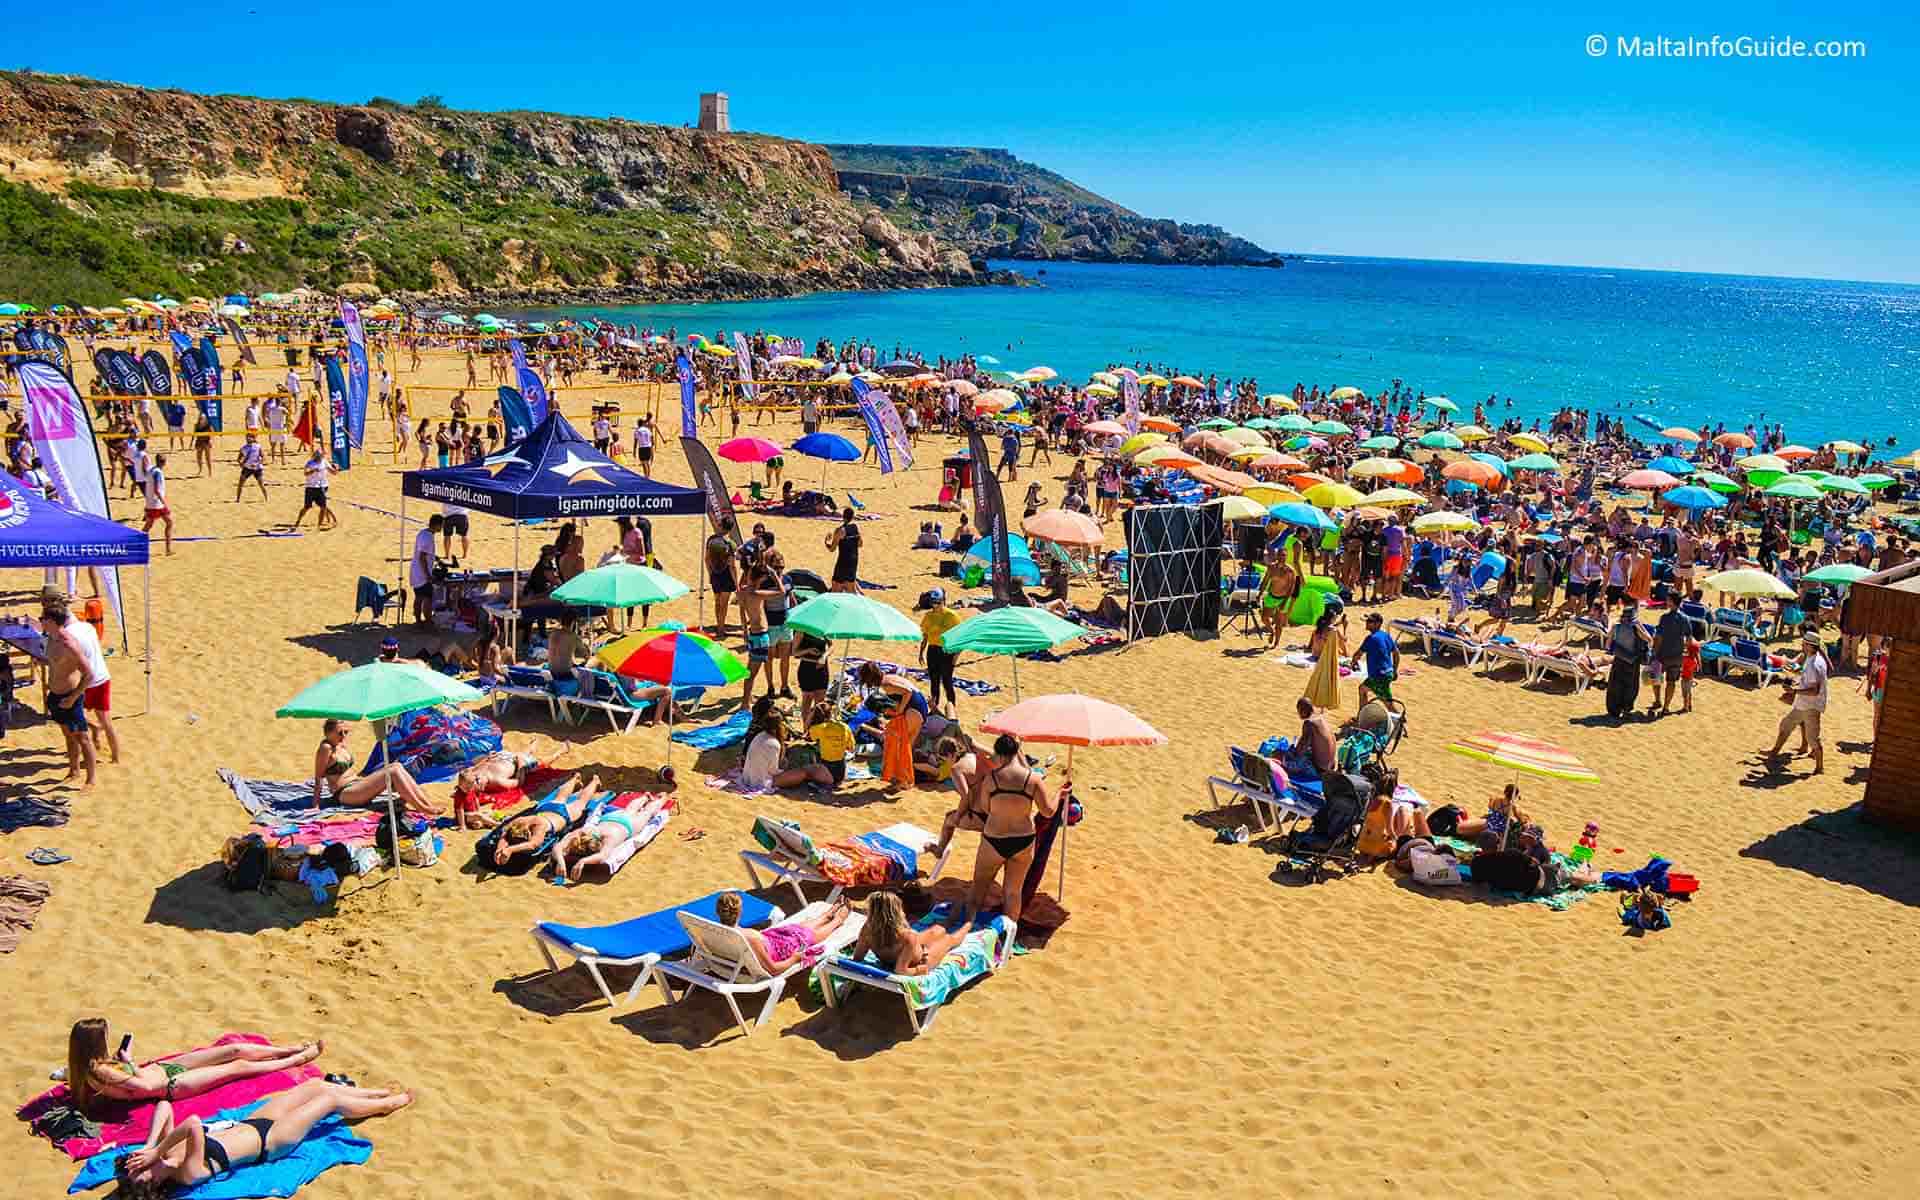 People sunbathing at Golden Bay Malta.